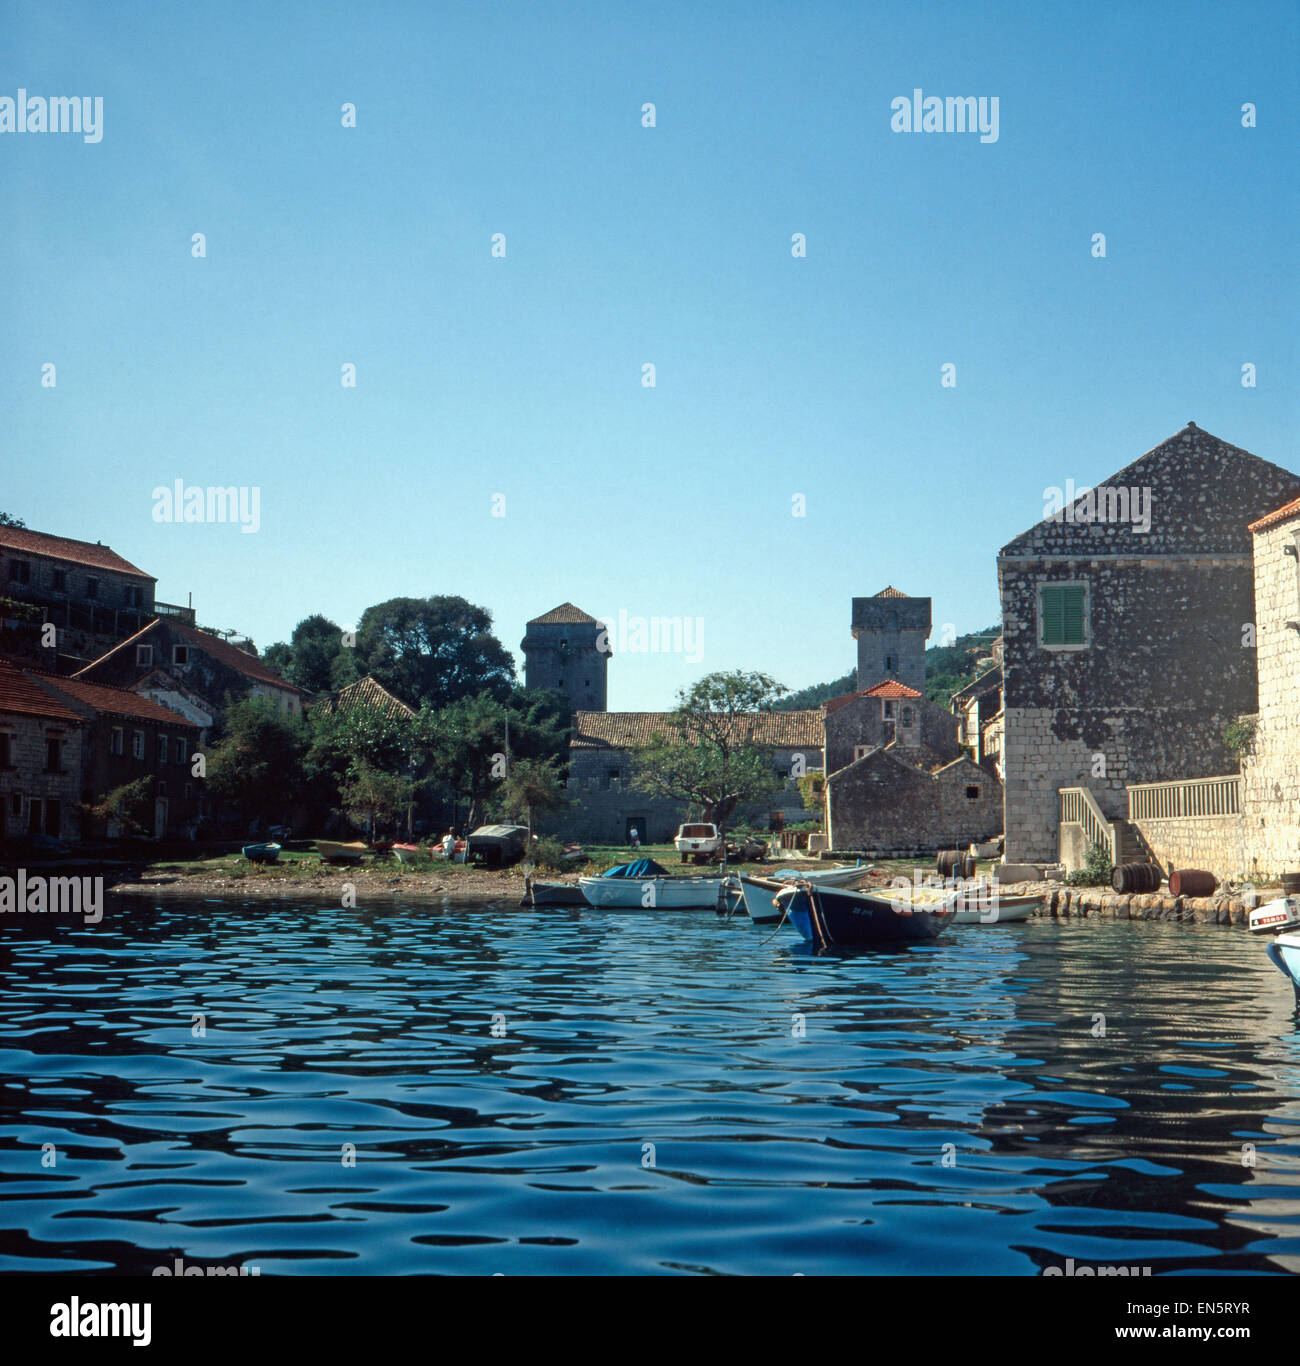 Urlaub auf der Insel Šipan, Dalmatien, Kroatien, Jugoslawien 1970er Jahre. Vacation on the Island of Šipan, Dalmatia, Croatia, Y Stock Photo